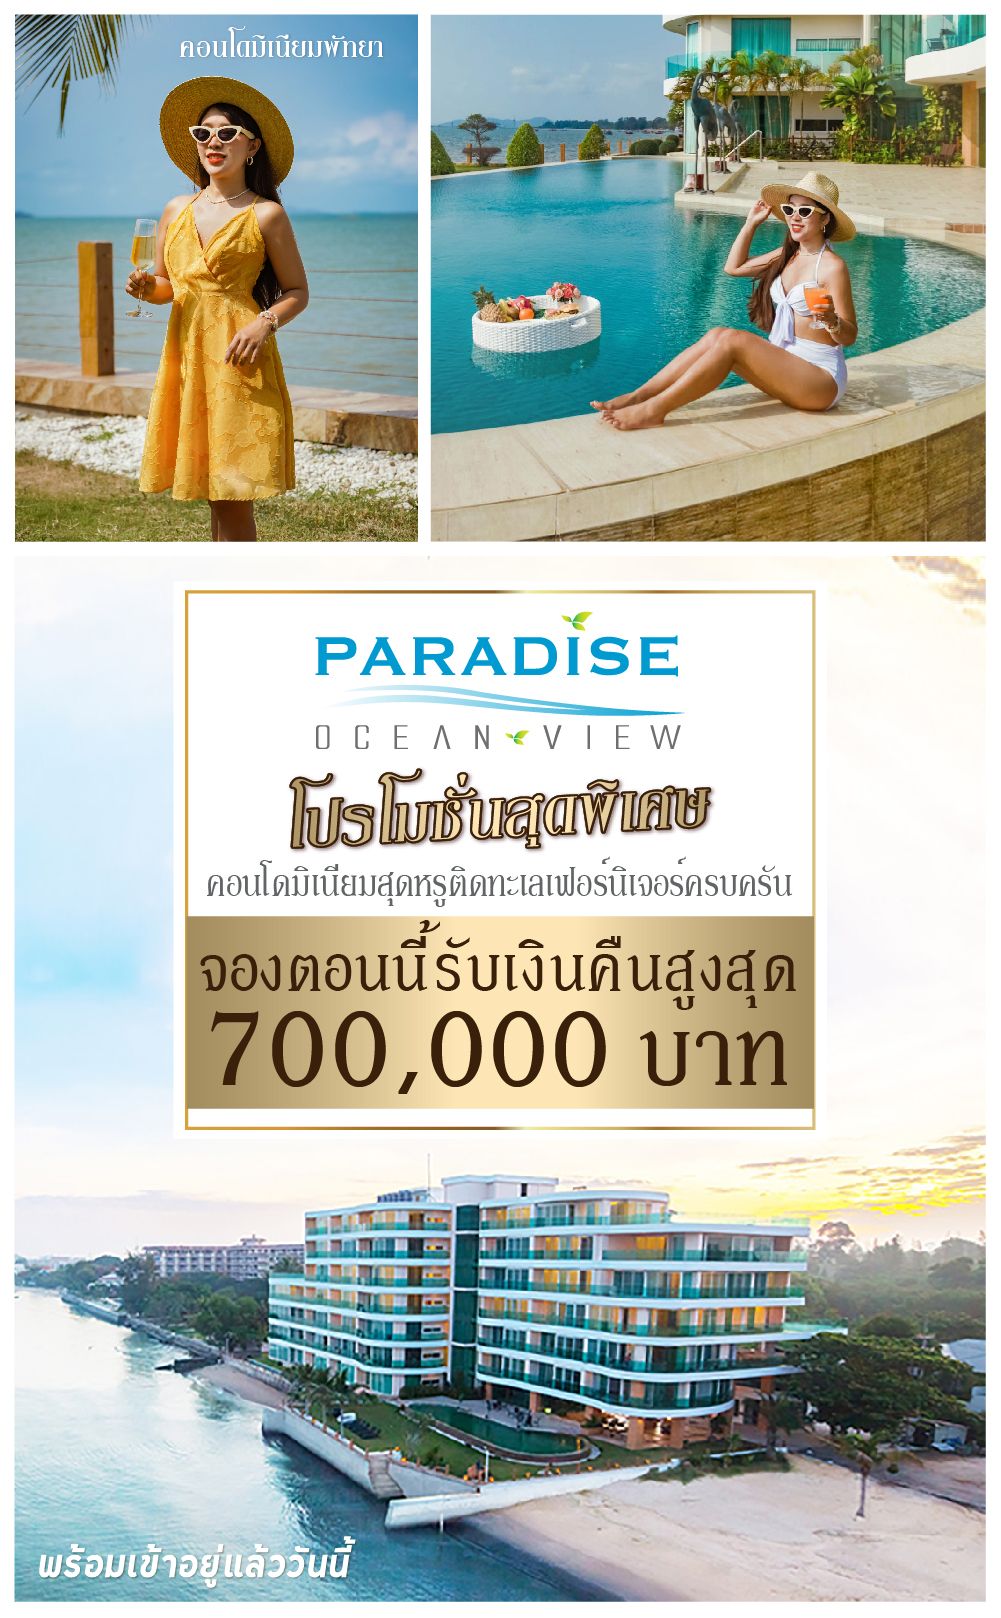 Landing Page Paradise Ocean View CashBack Promotion Cover Photo MOBILE Version THAI